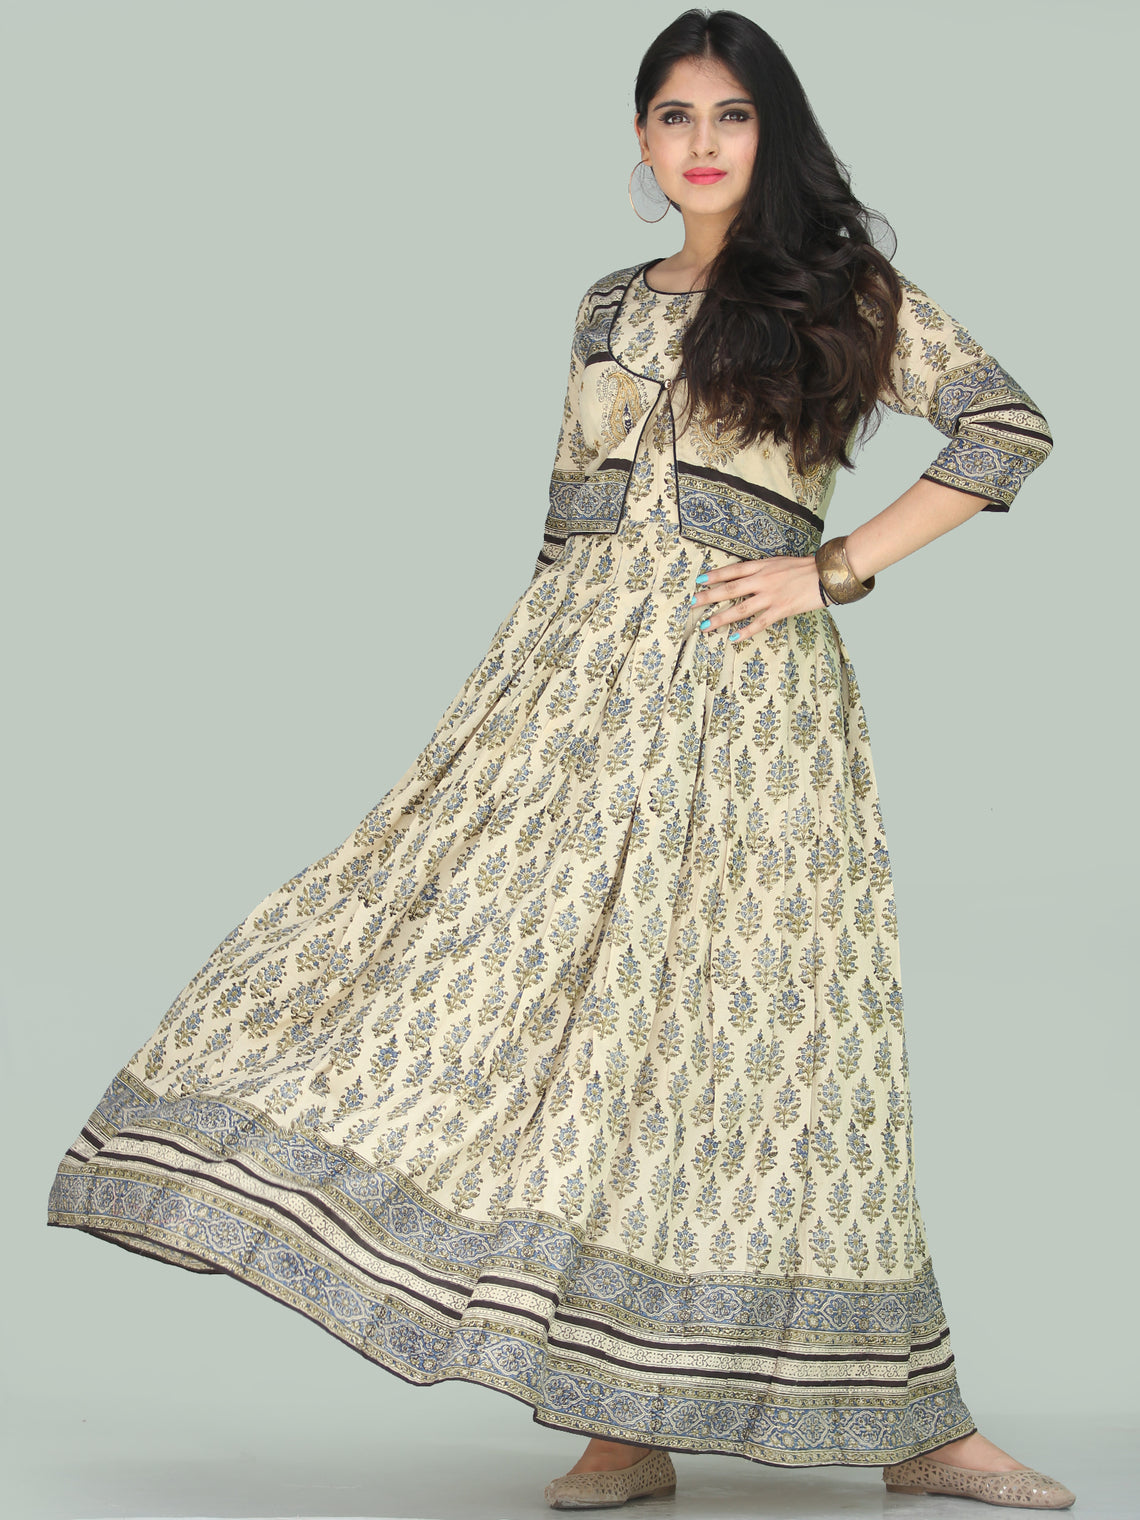 Naaz Jhara - Hand Block Printed Long Cotton Embroidered Jacket Dress ...